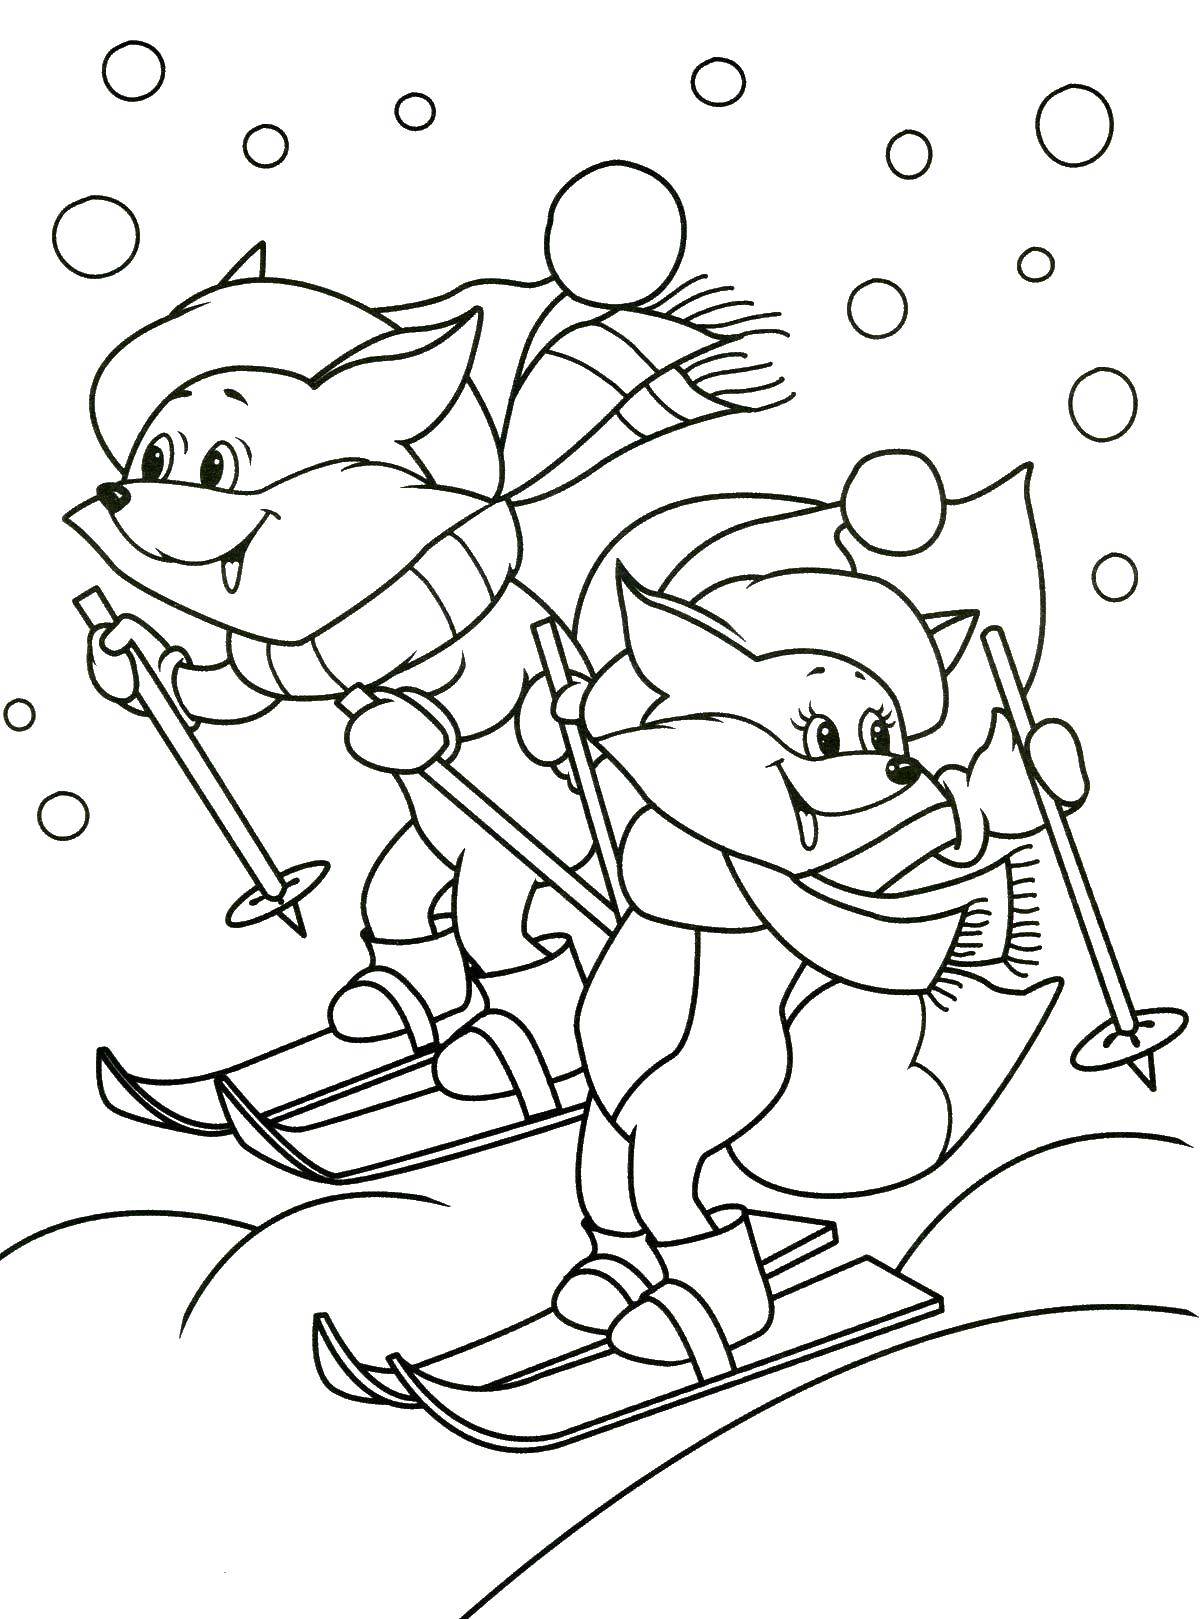 Coloring Fox ski. Category winter. Tags:  Fox, skiing.